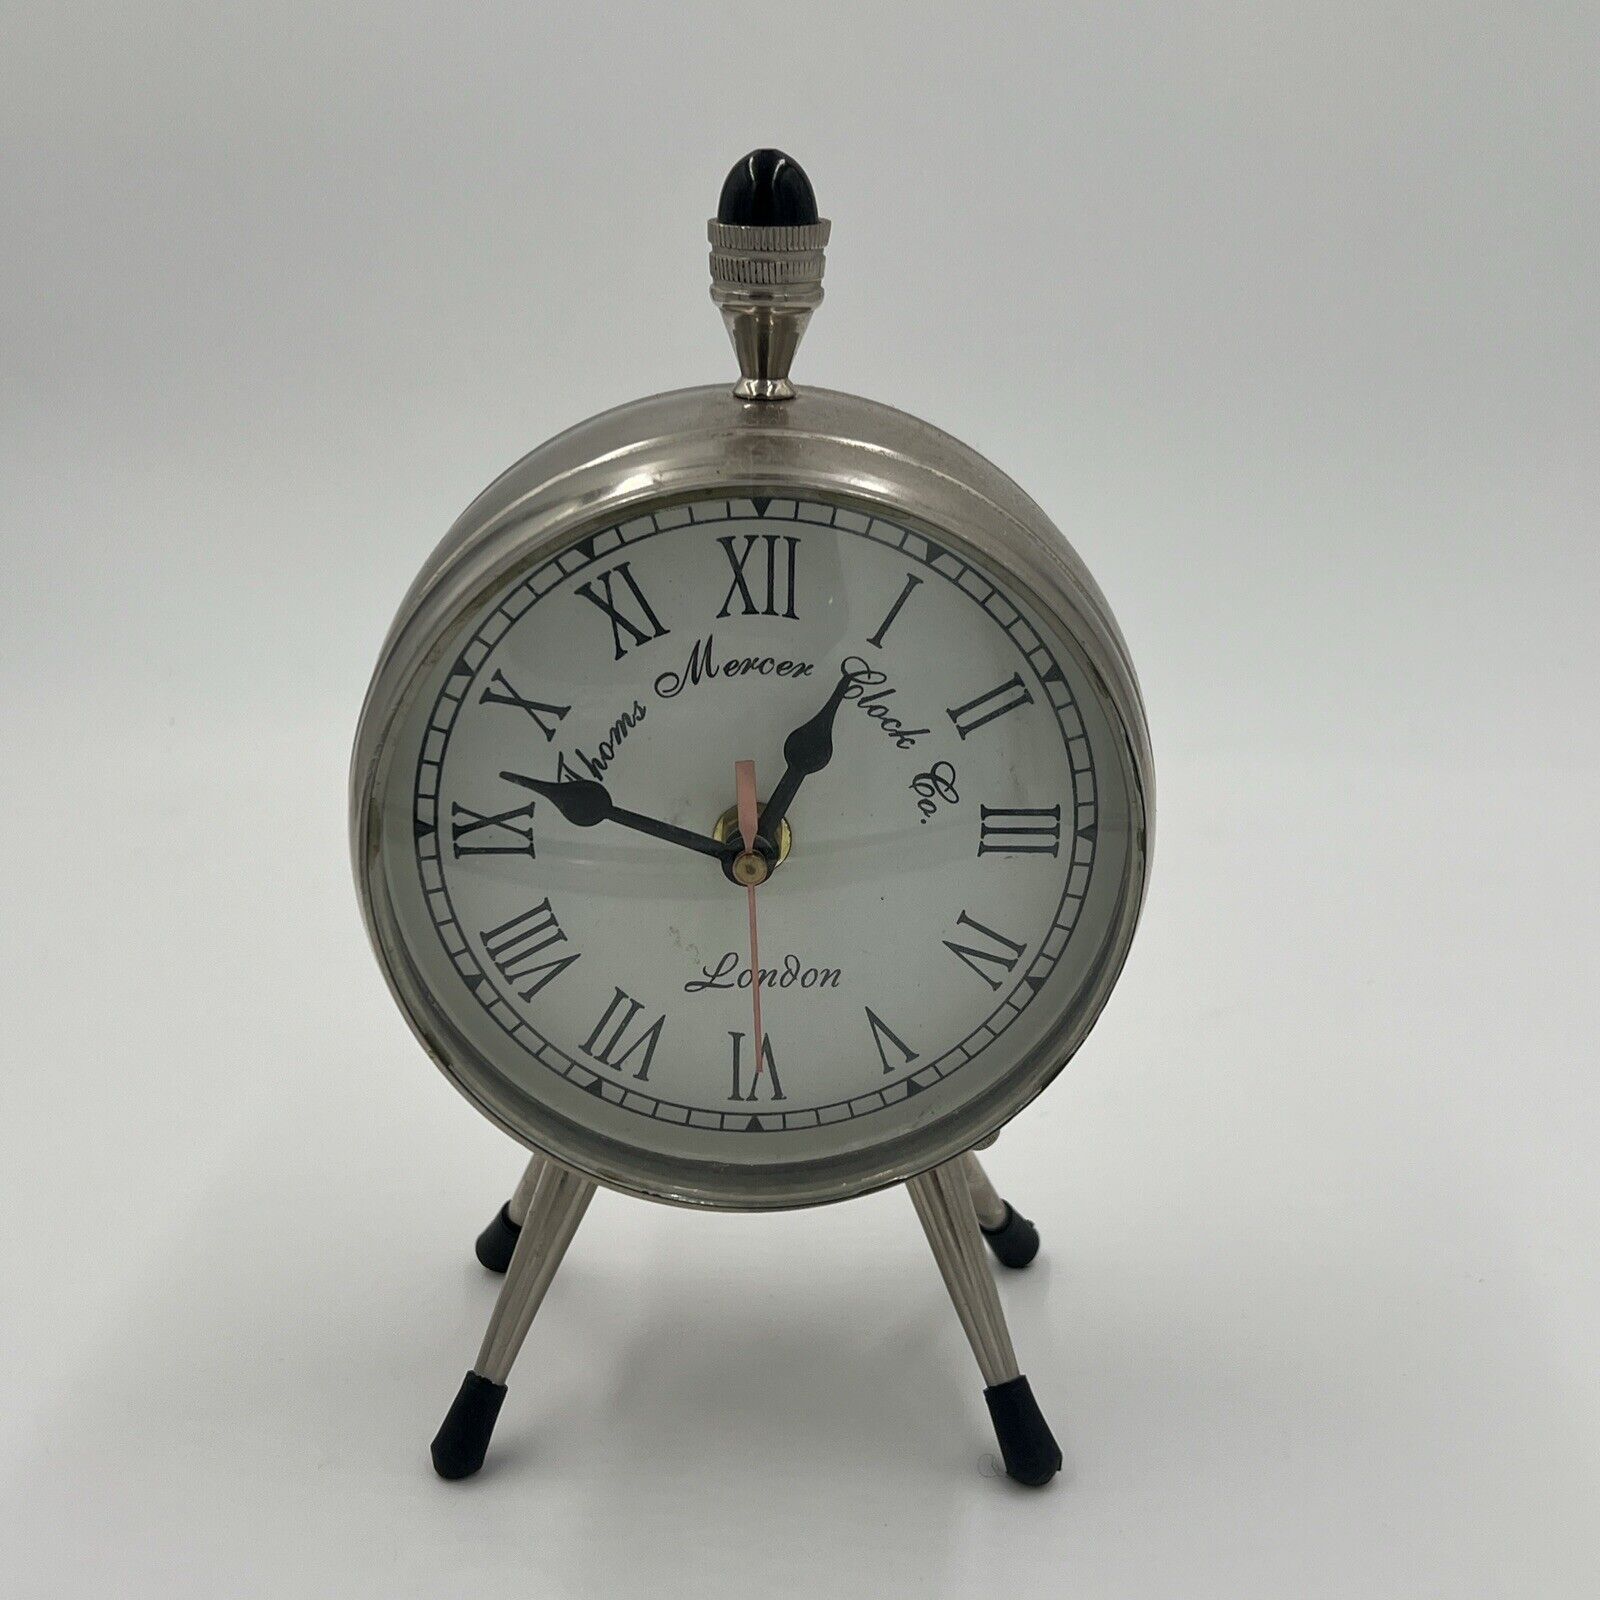 Modern Thomas Mercer Clock Co Analog Clock Deck Mantle London